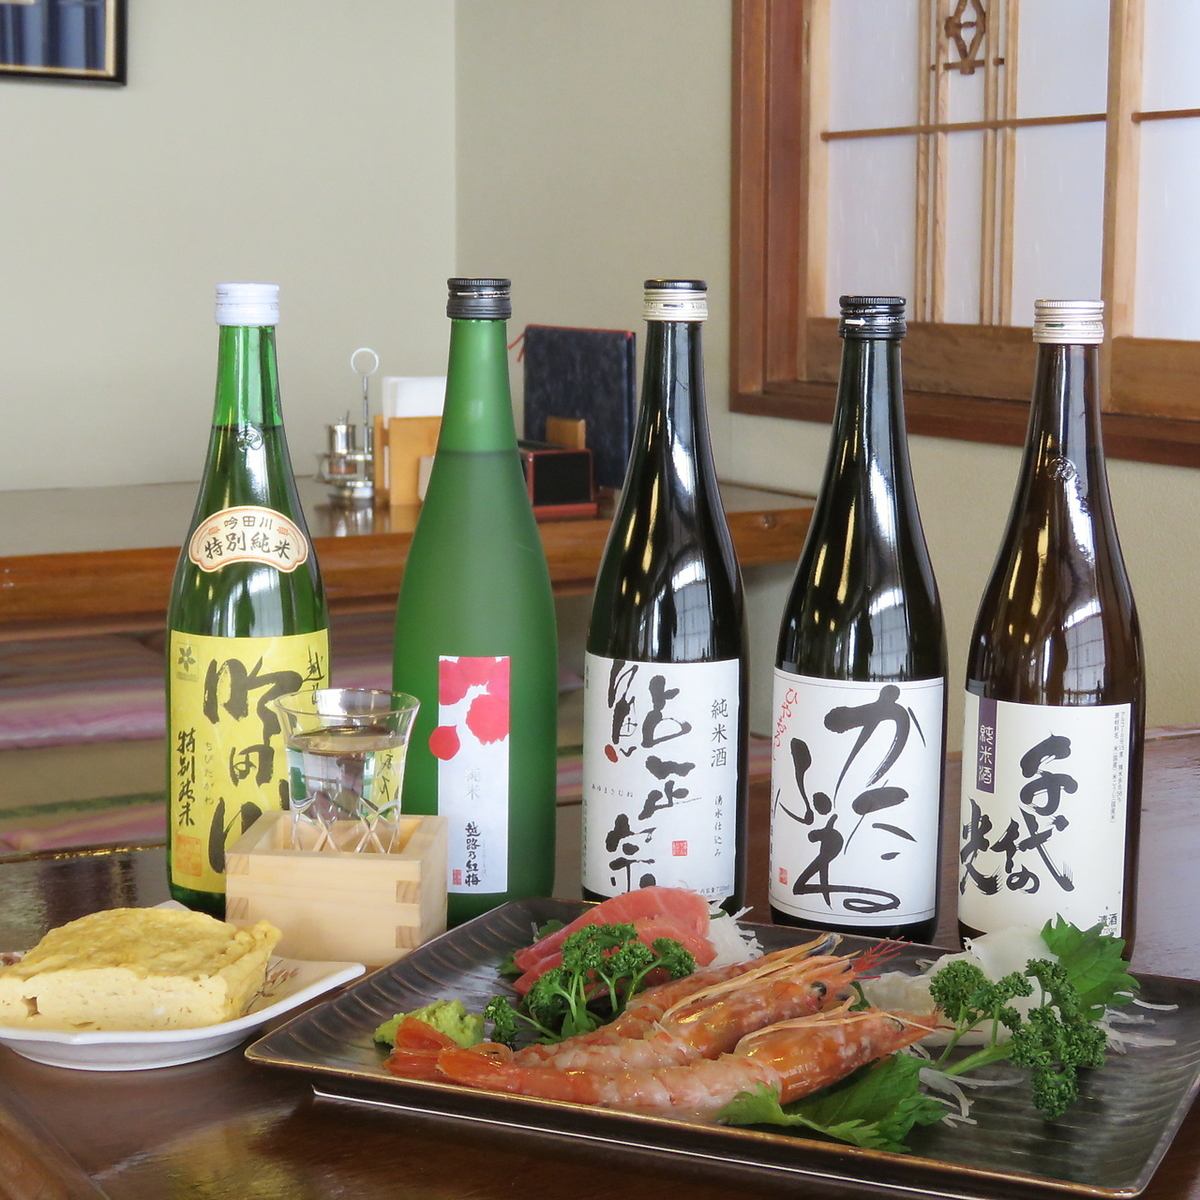 An adult soba restaurant where you can enjoy sake.